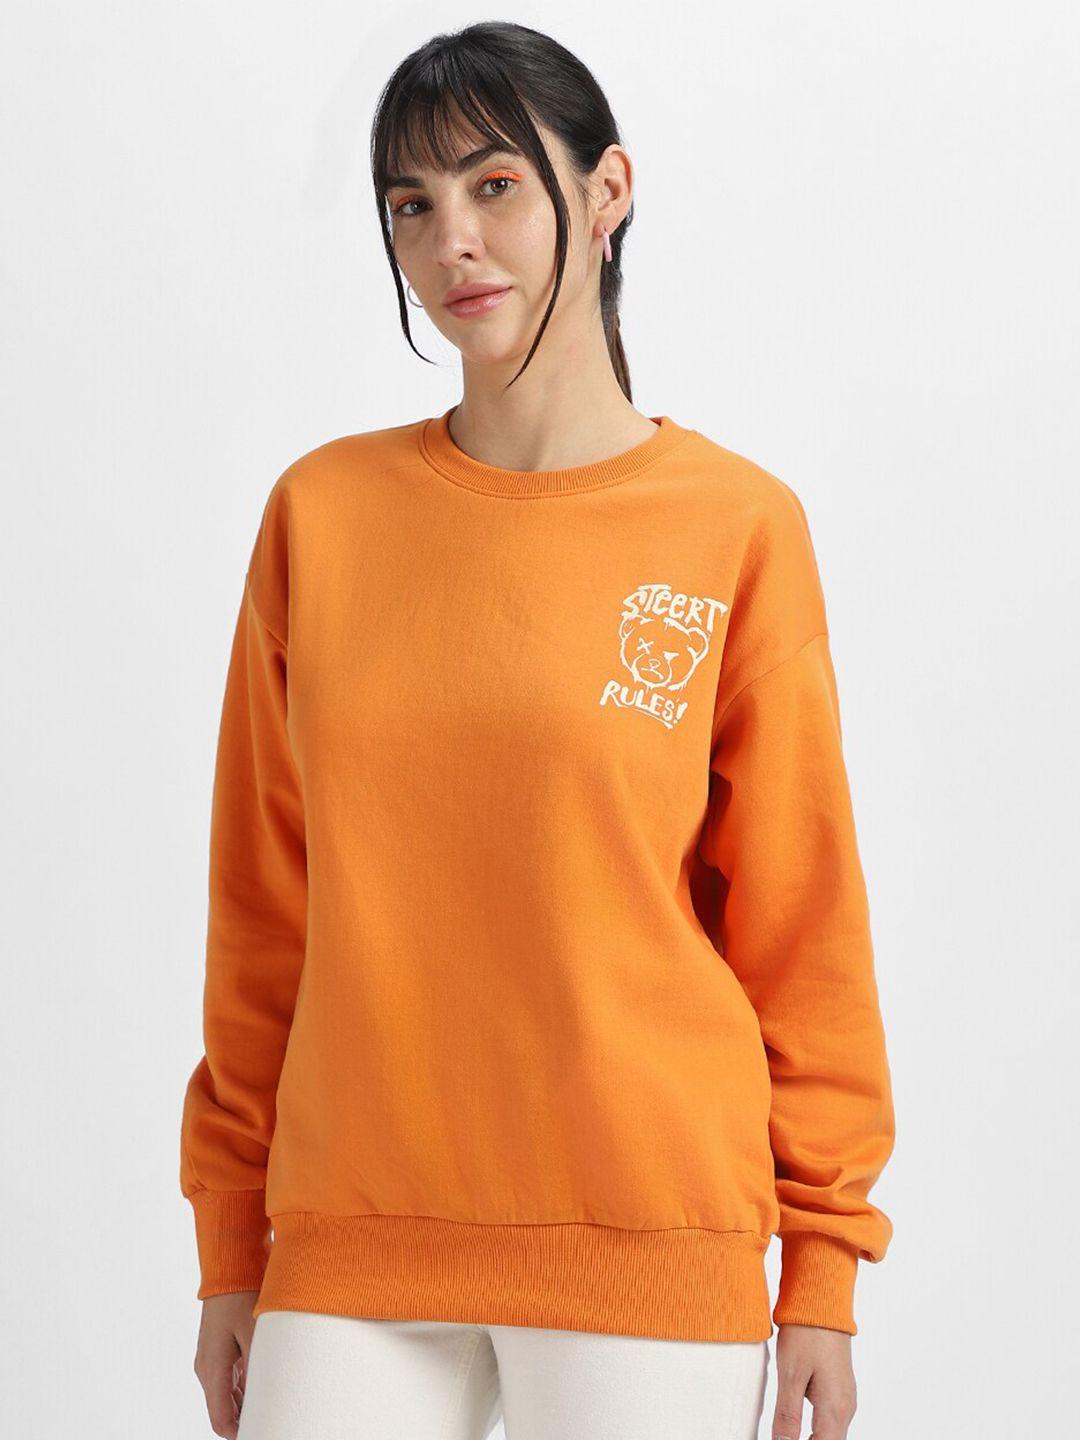 juneberry-graphic-printed-oversized-crew-neck-pullover-fleece-sweatshirt